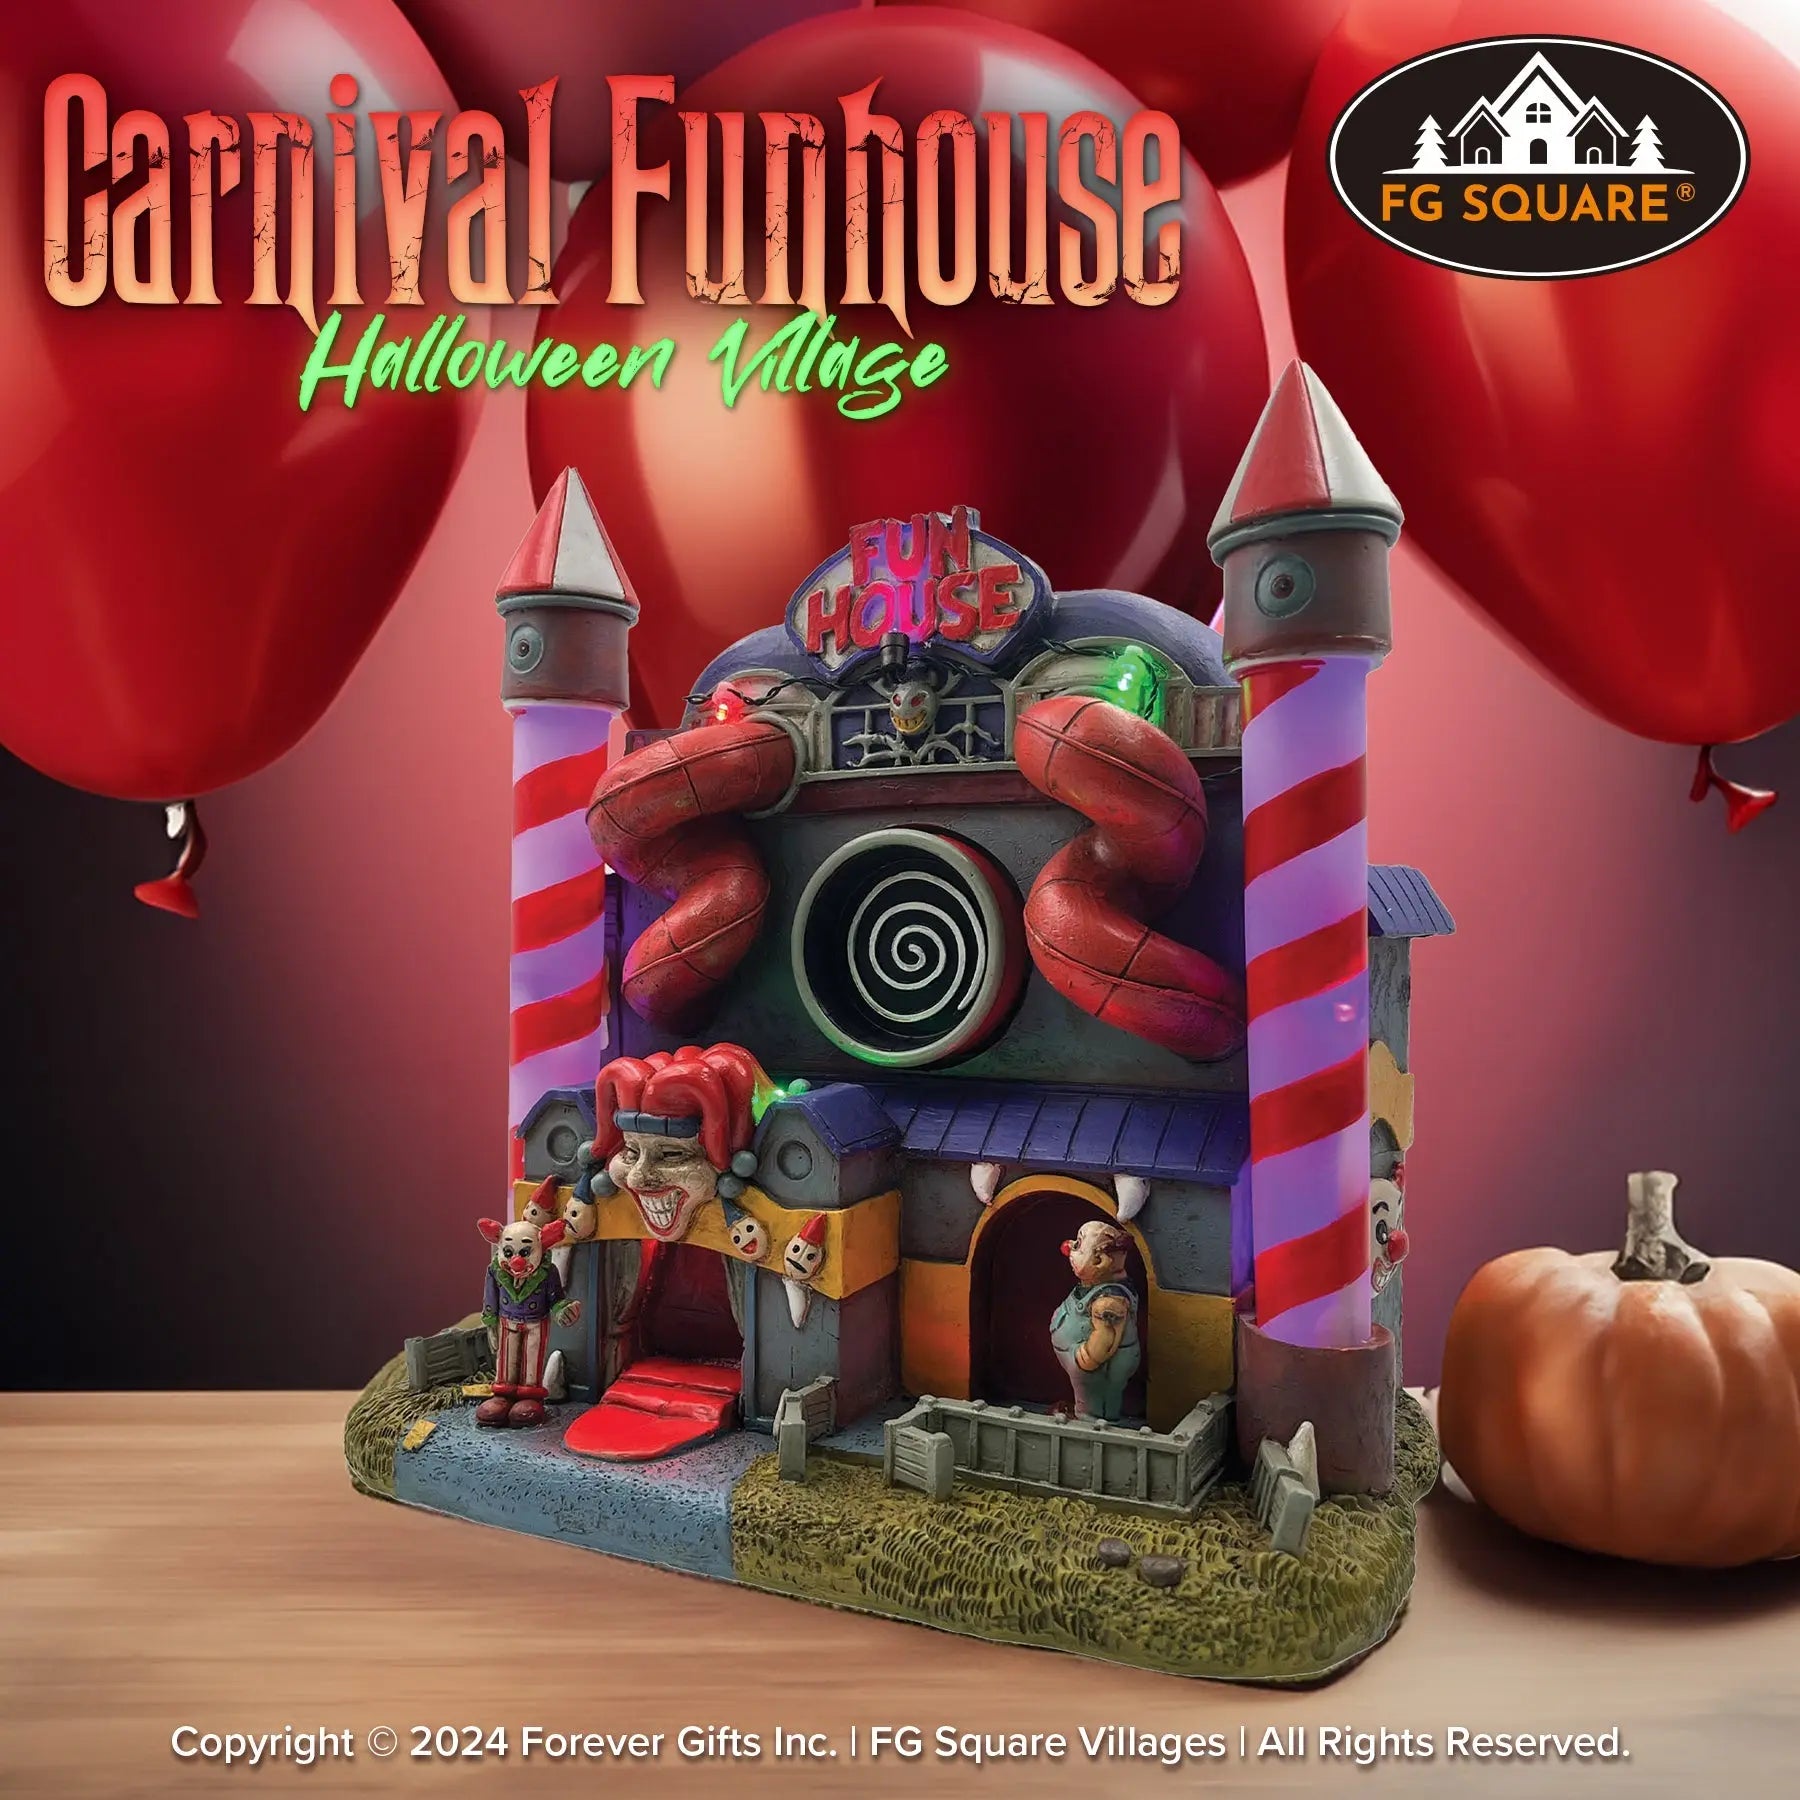 Carnival Funhouse ShopFGI